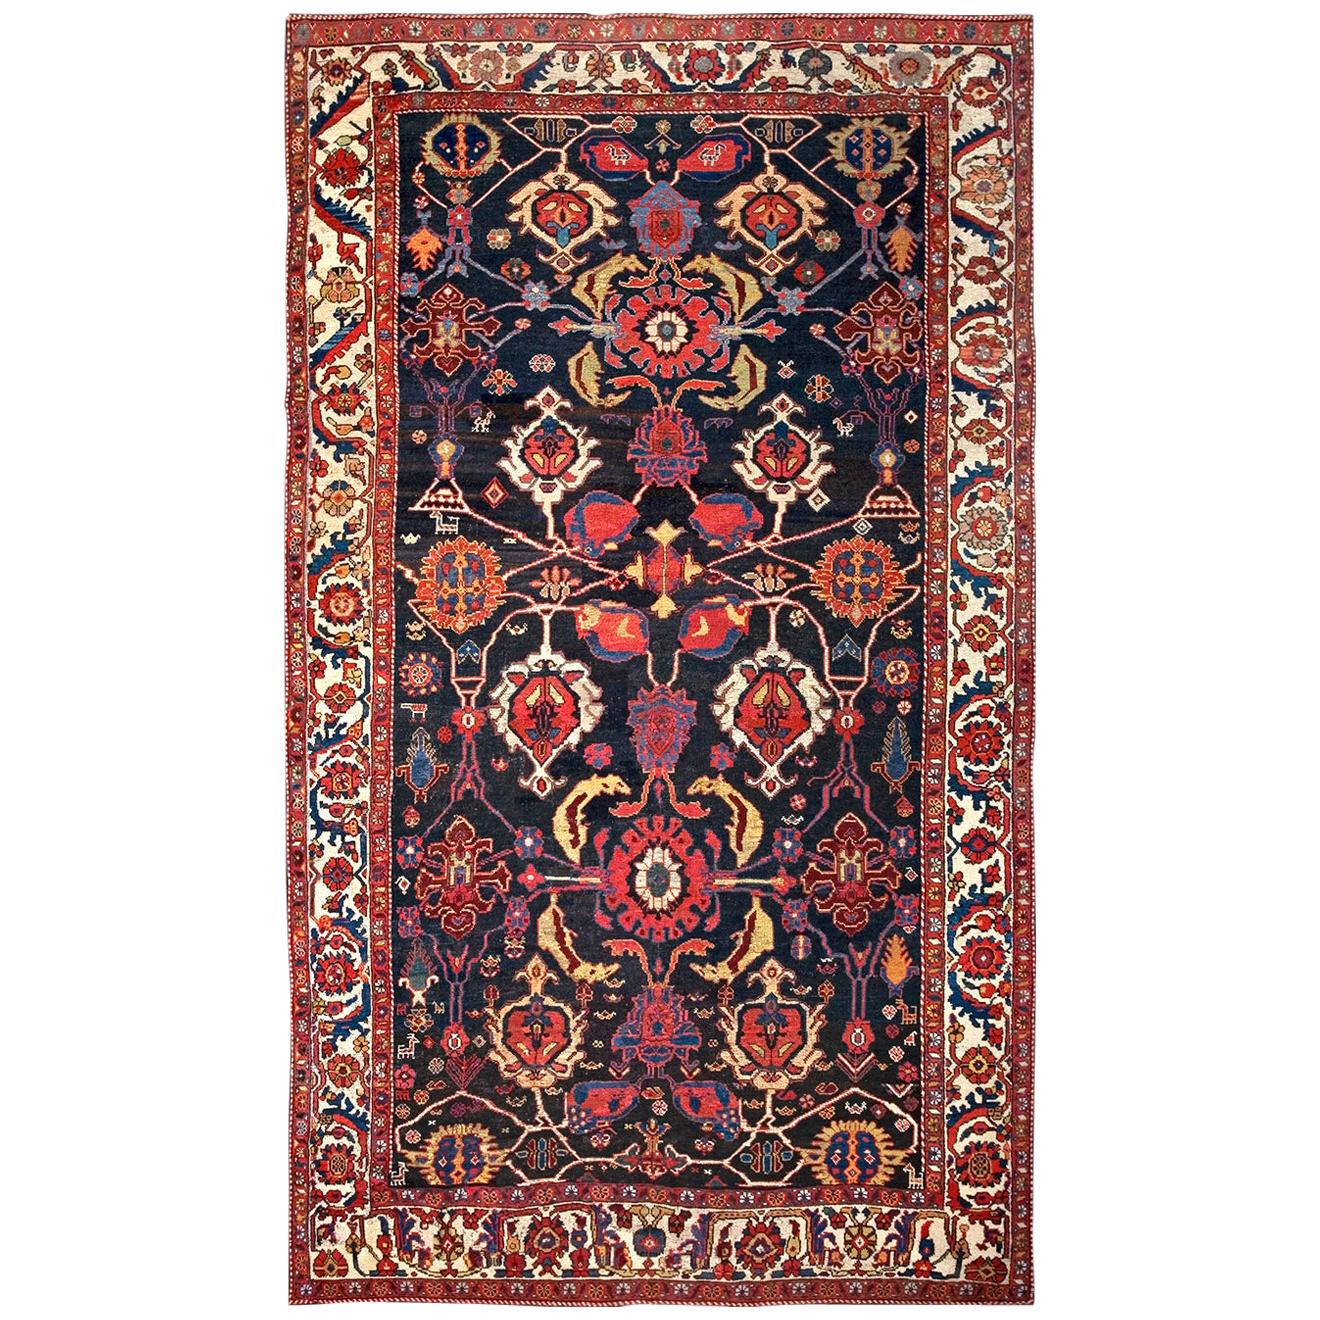 Late 19th Century Persian Bakhtiari Carpet ( 6'6" x 10'9" - 198 x 327 cm )